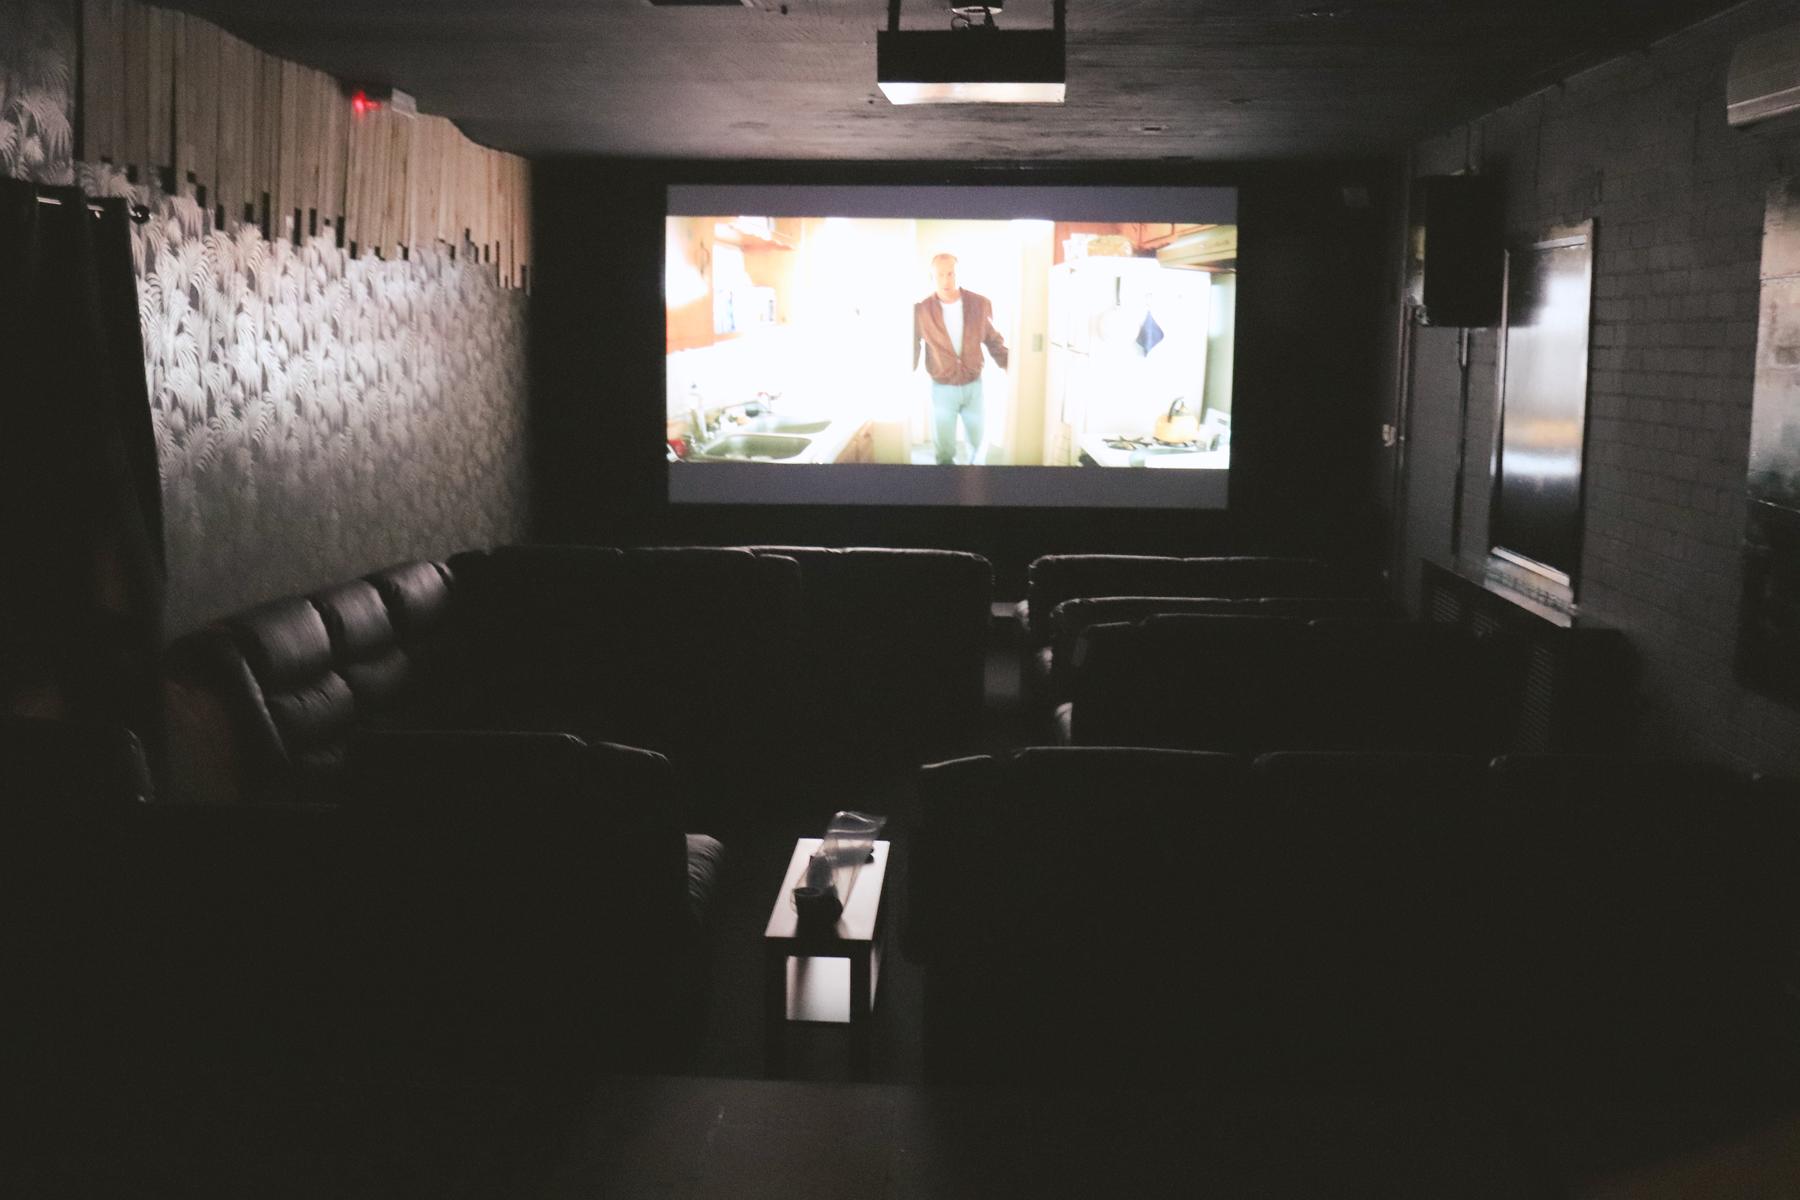 Pulp Fiction - The Loft Cinema